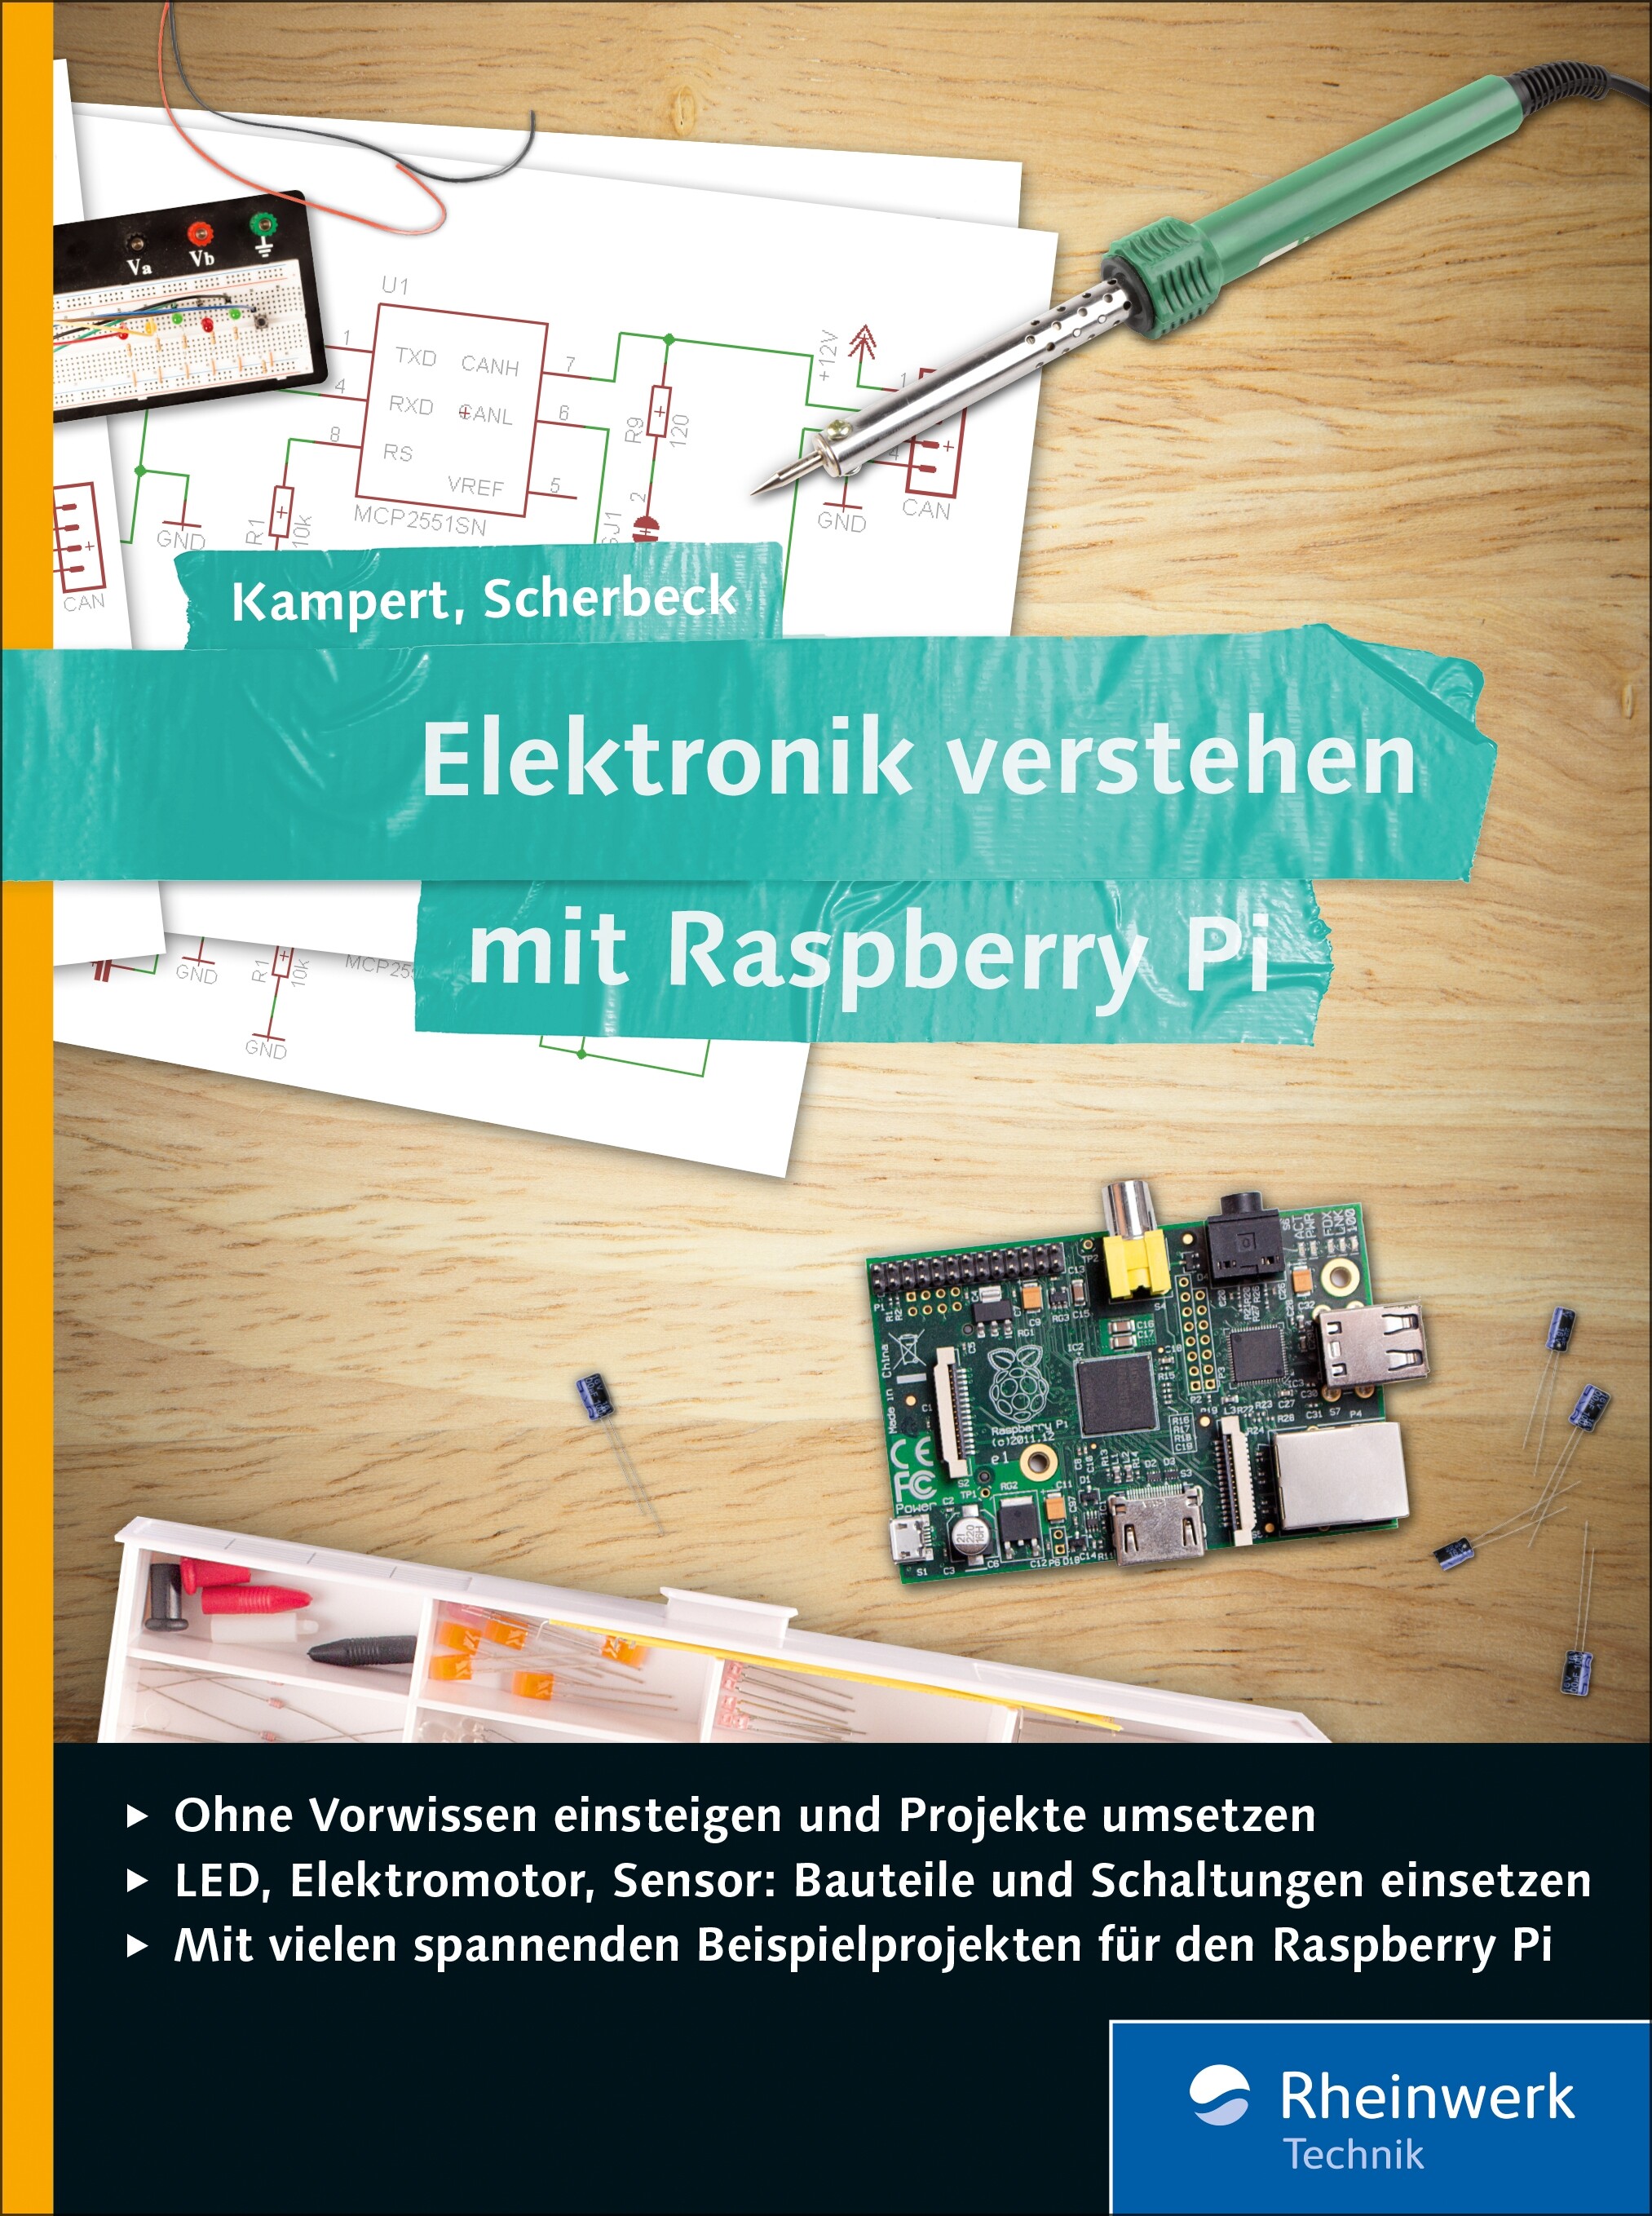 Elektronik verstehen mit dem Raspberry Pi